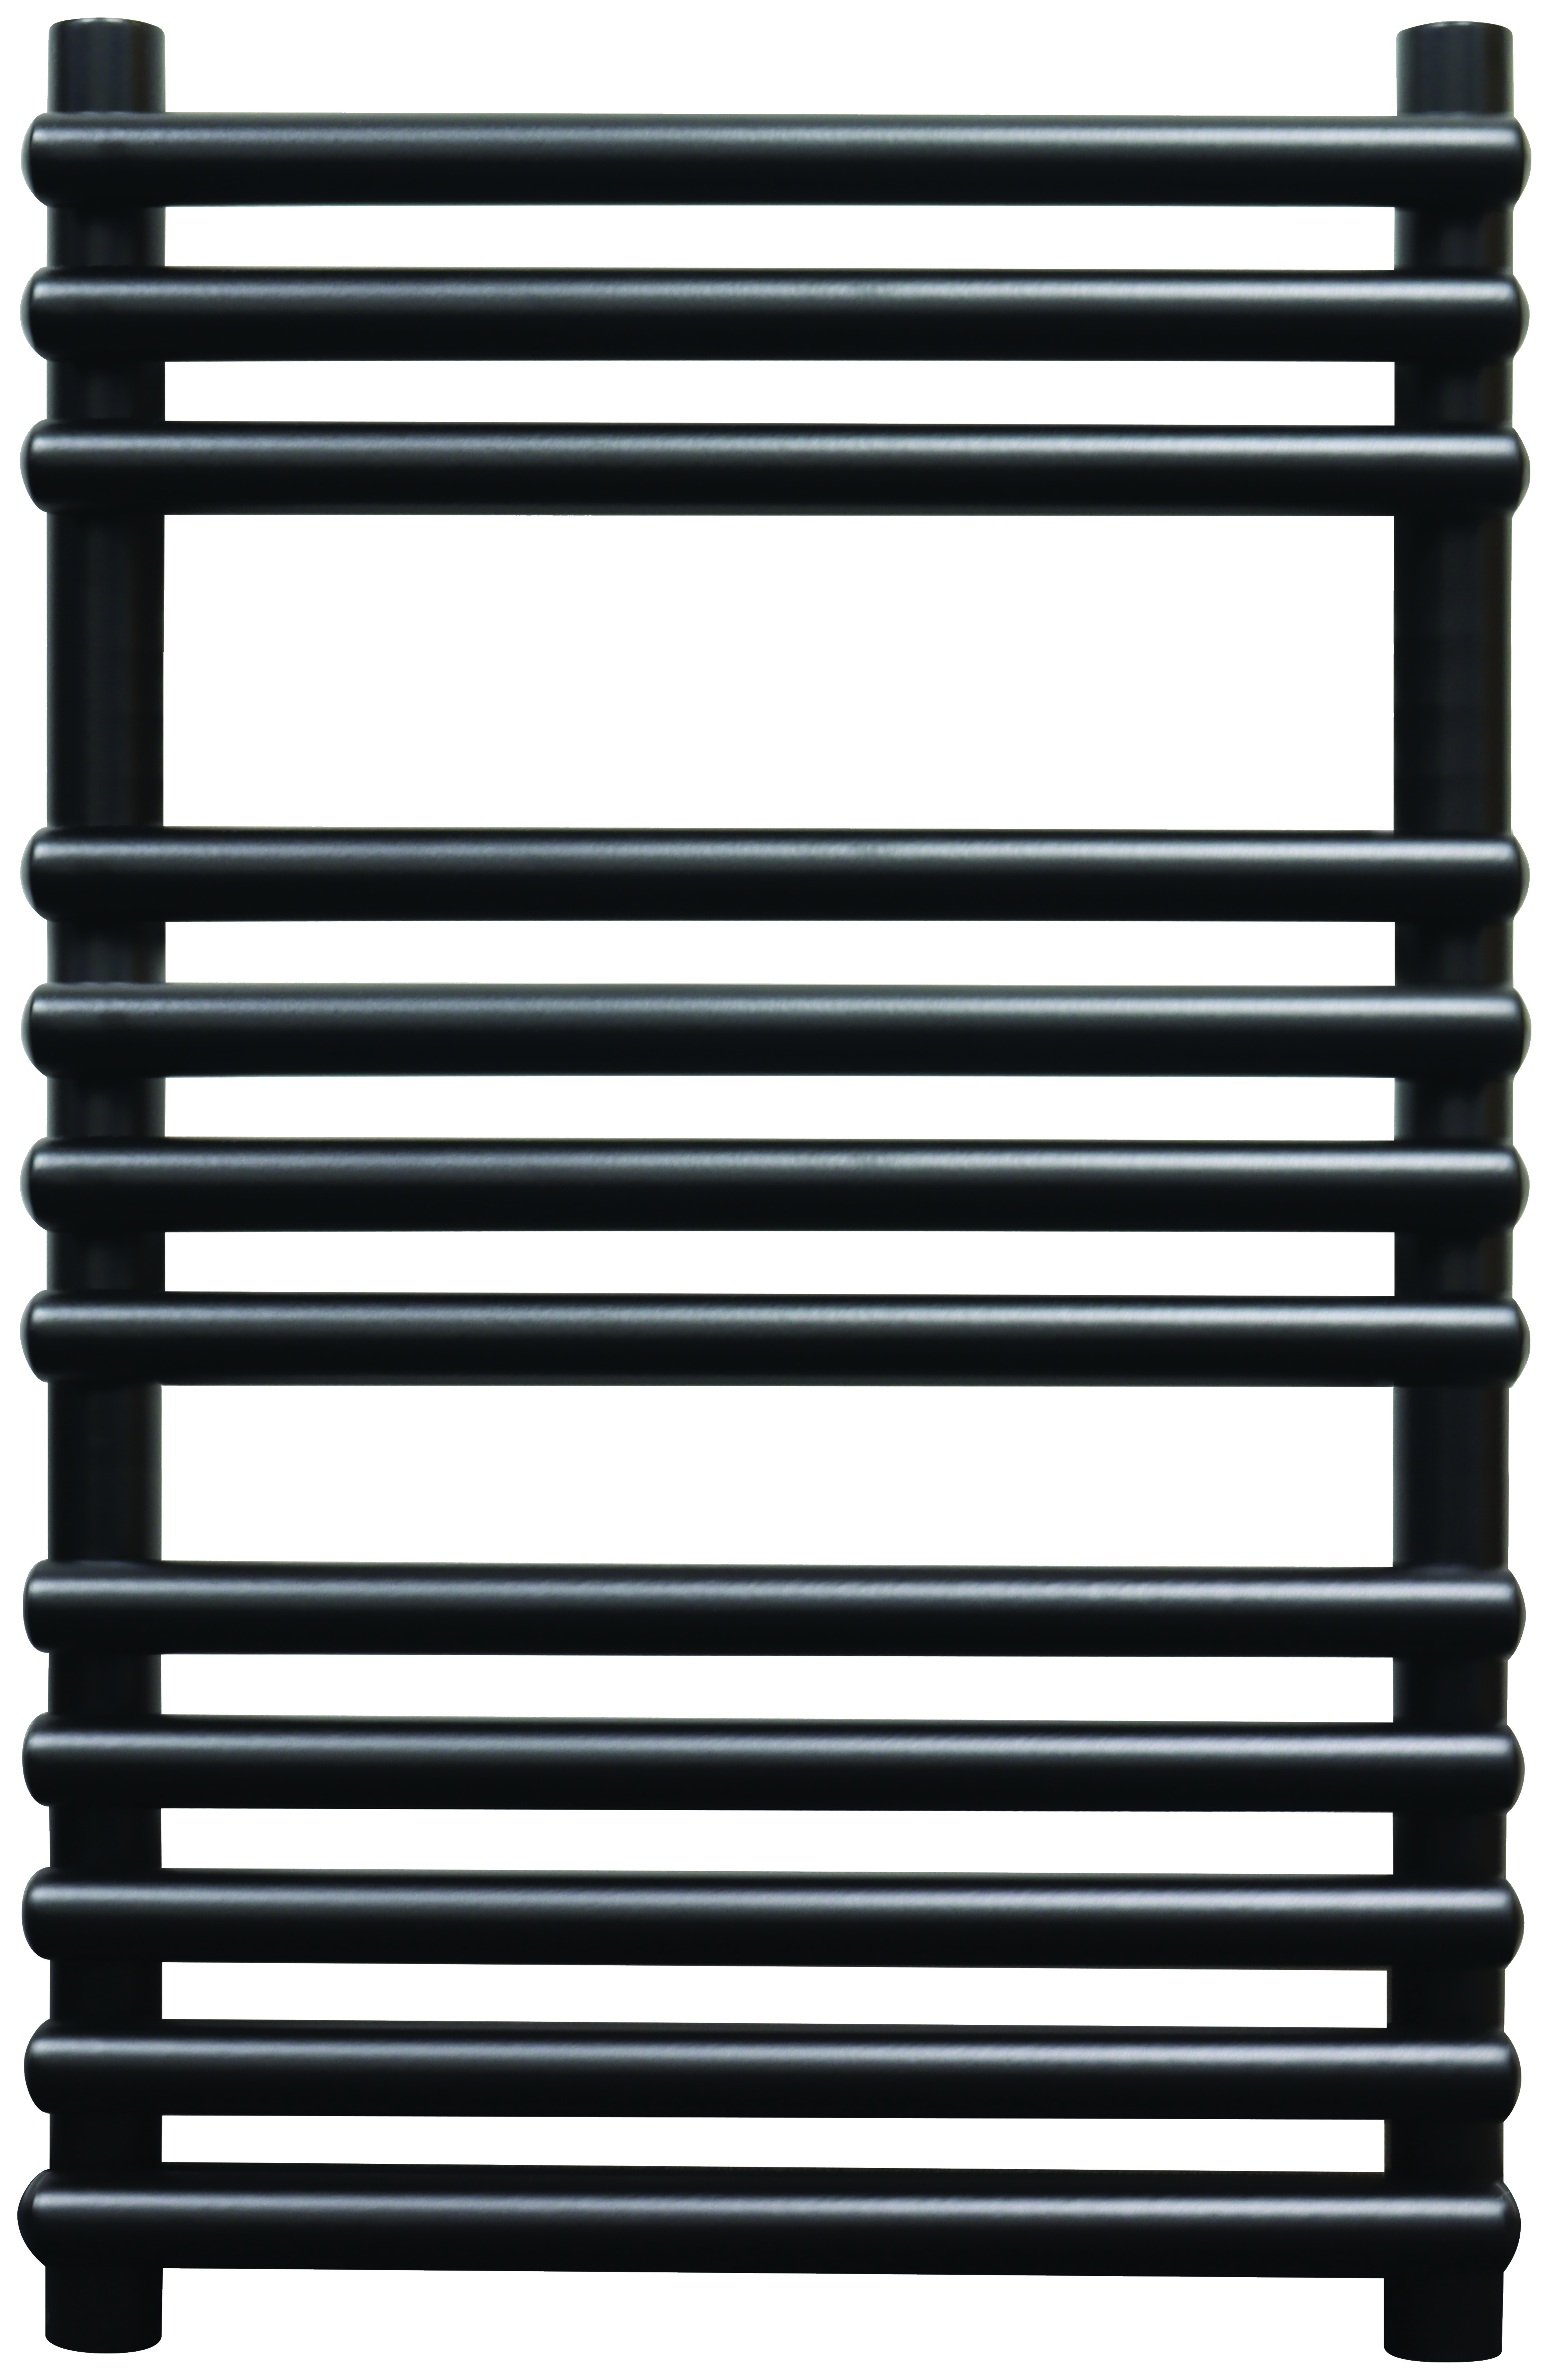 Image of Towelrads Double Iridio Matt Black Towel Radiator - 1800 x 500mm